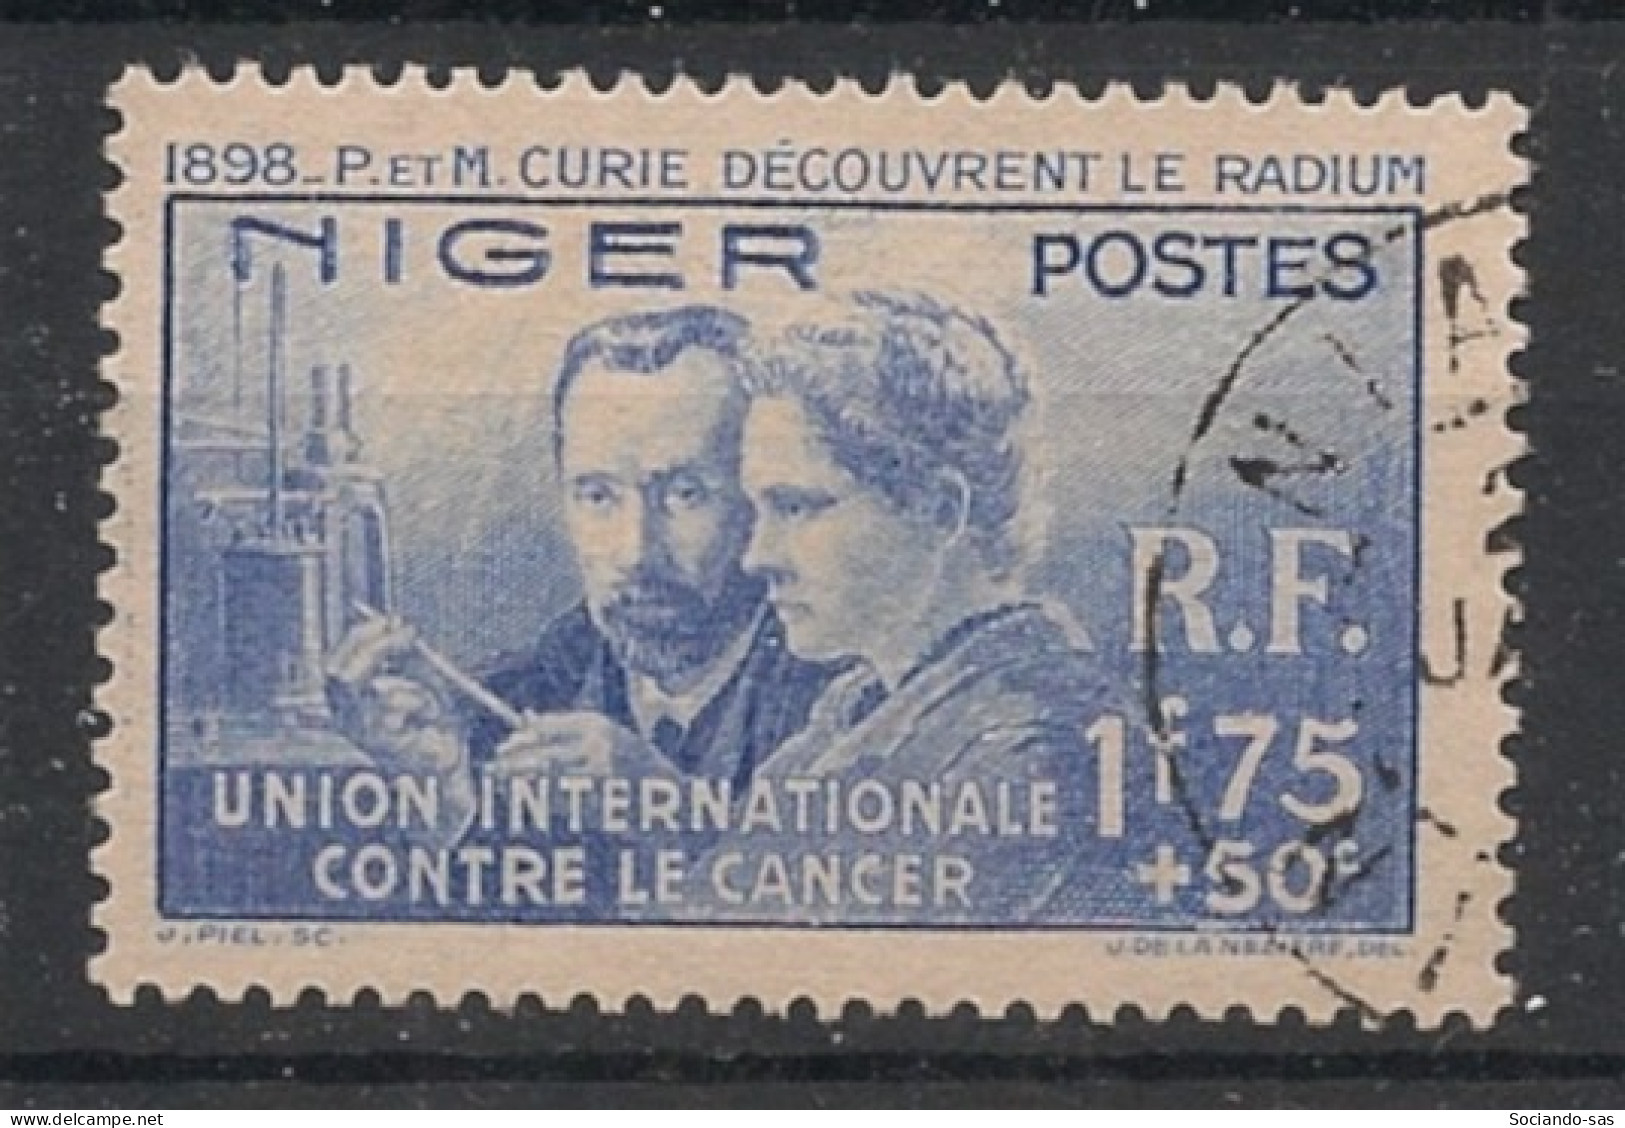 NIGER - 1938 - N°YT. 63 - Marie Curie - Oblitéré / Used - Gebraucht